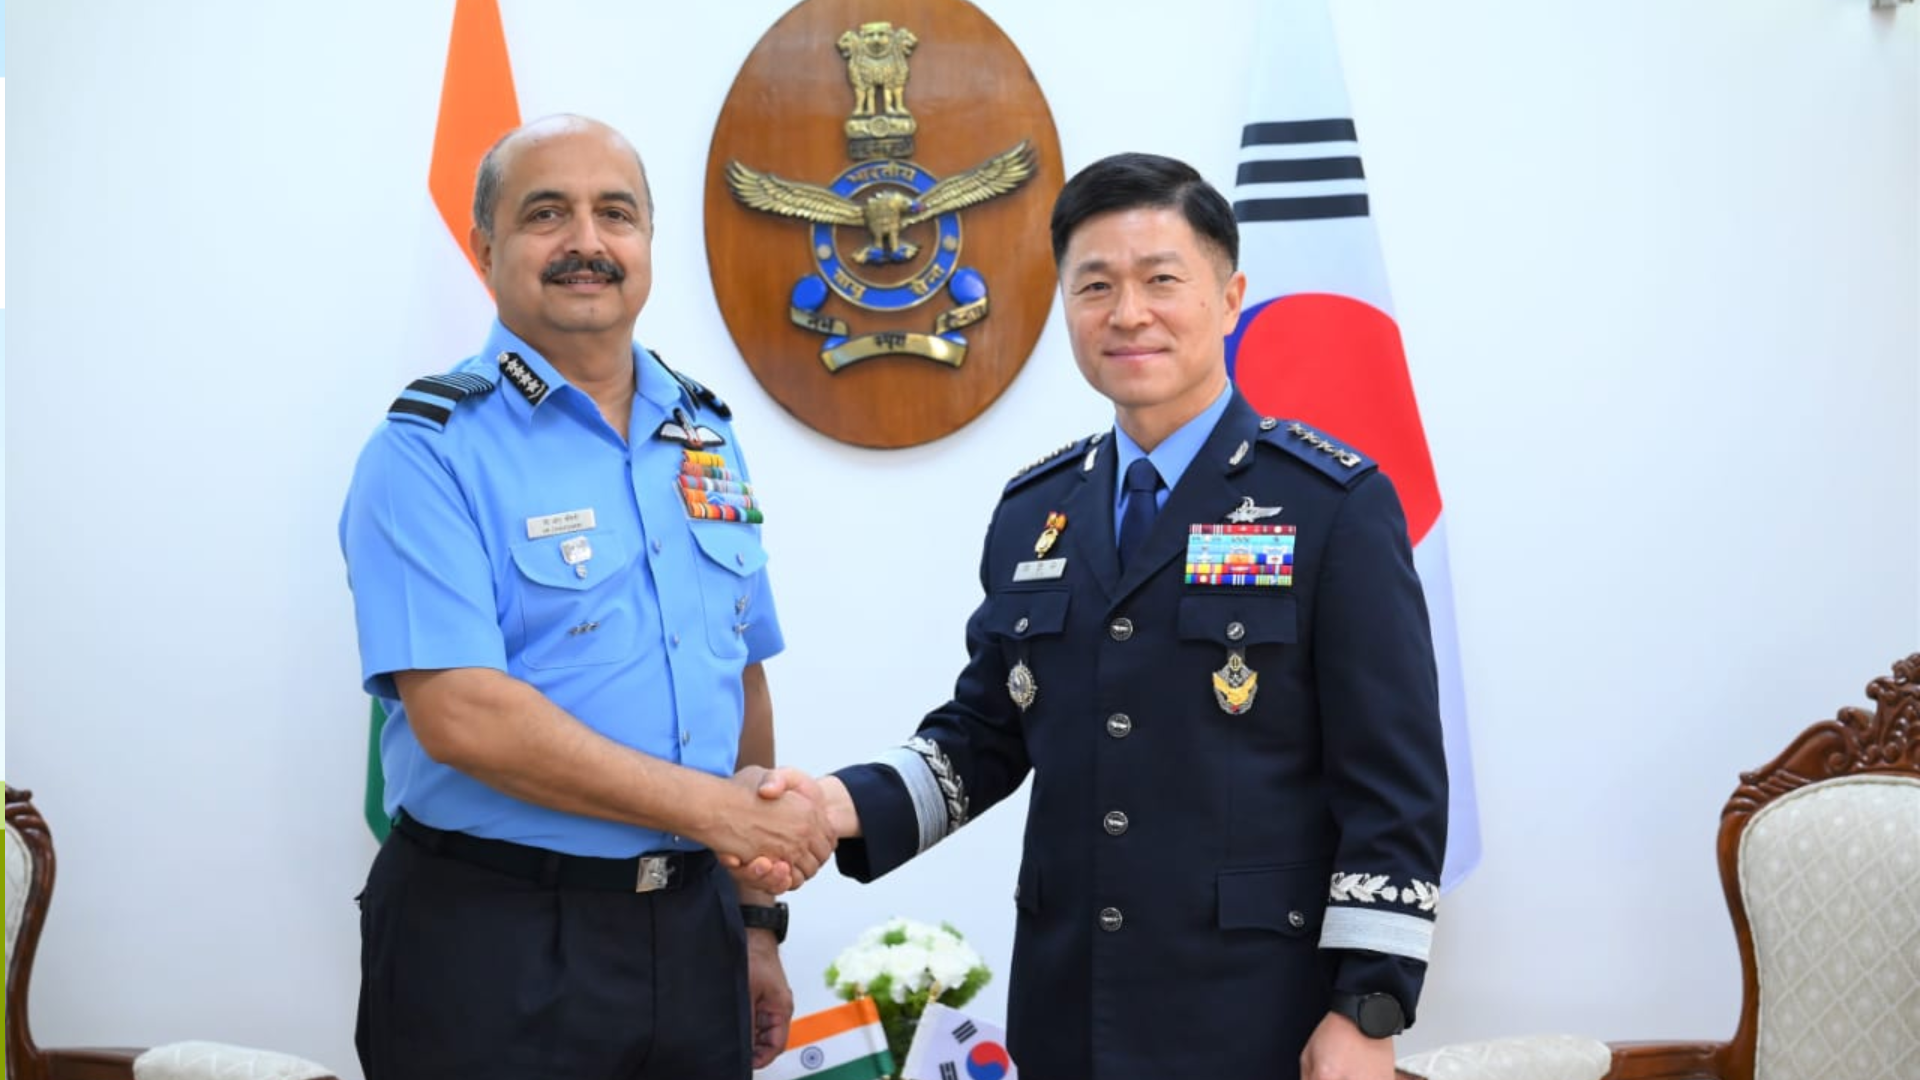 Delhi: South Korea’s Air Force Chief Meets Indian counterpart Air Chief Marshal VR Chaudhari